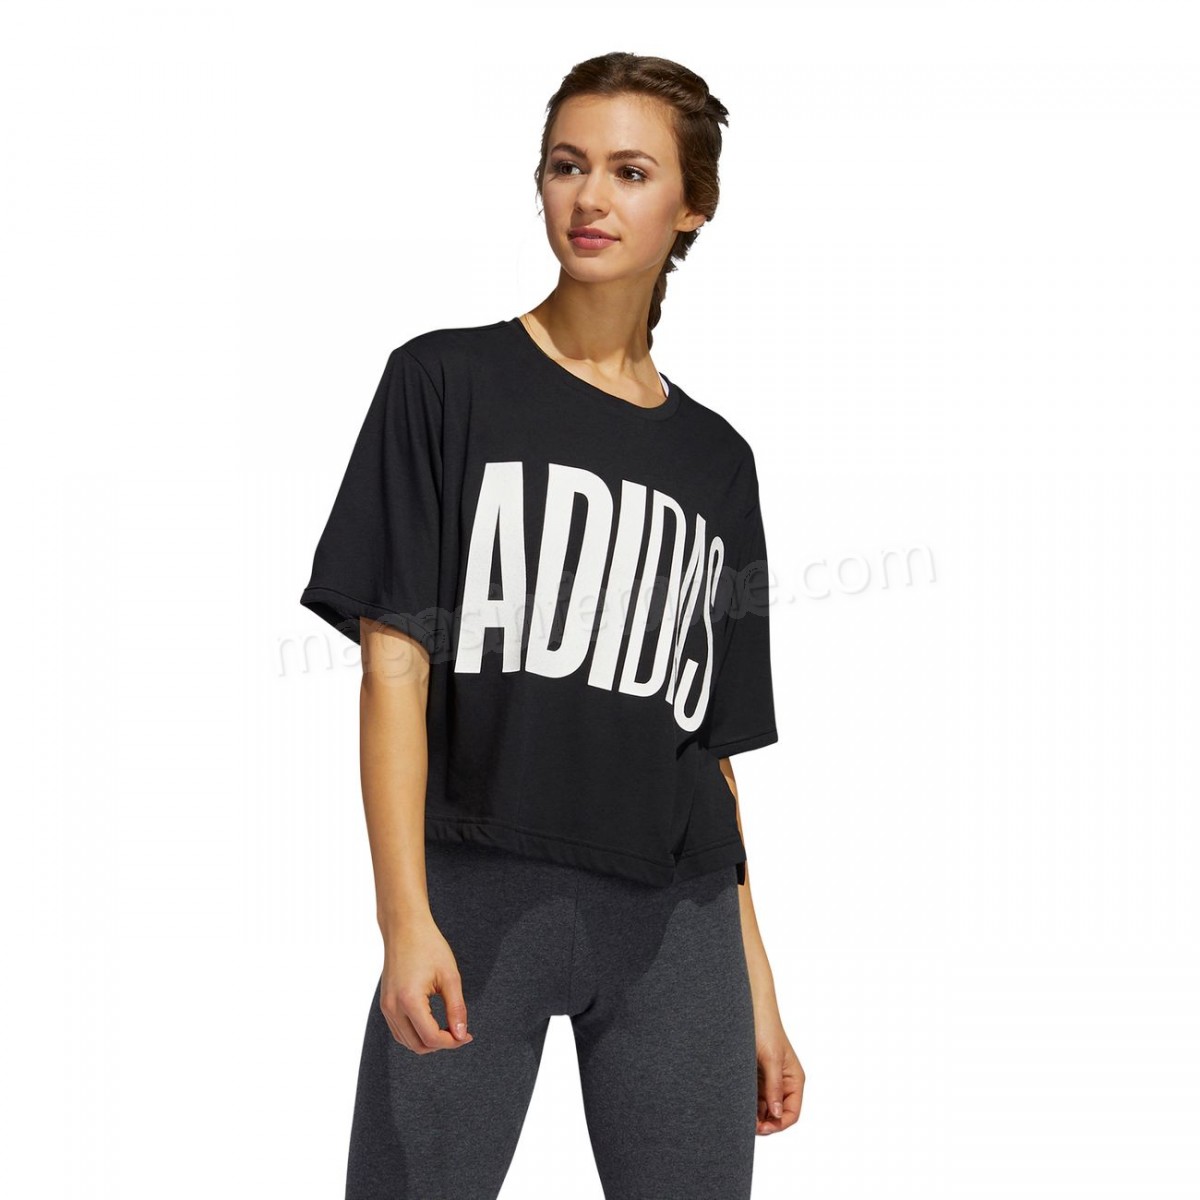 Adidas-Mode- Lifestyle femme ADIDAS Adidas Univ 1 en solde - -2